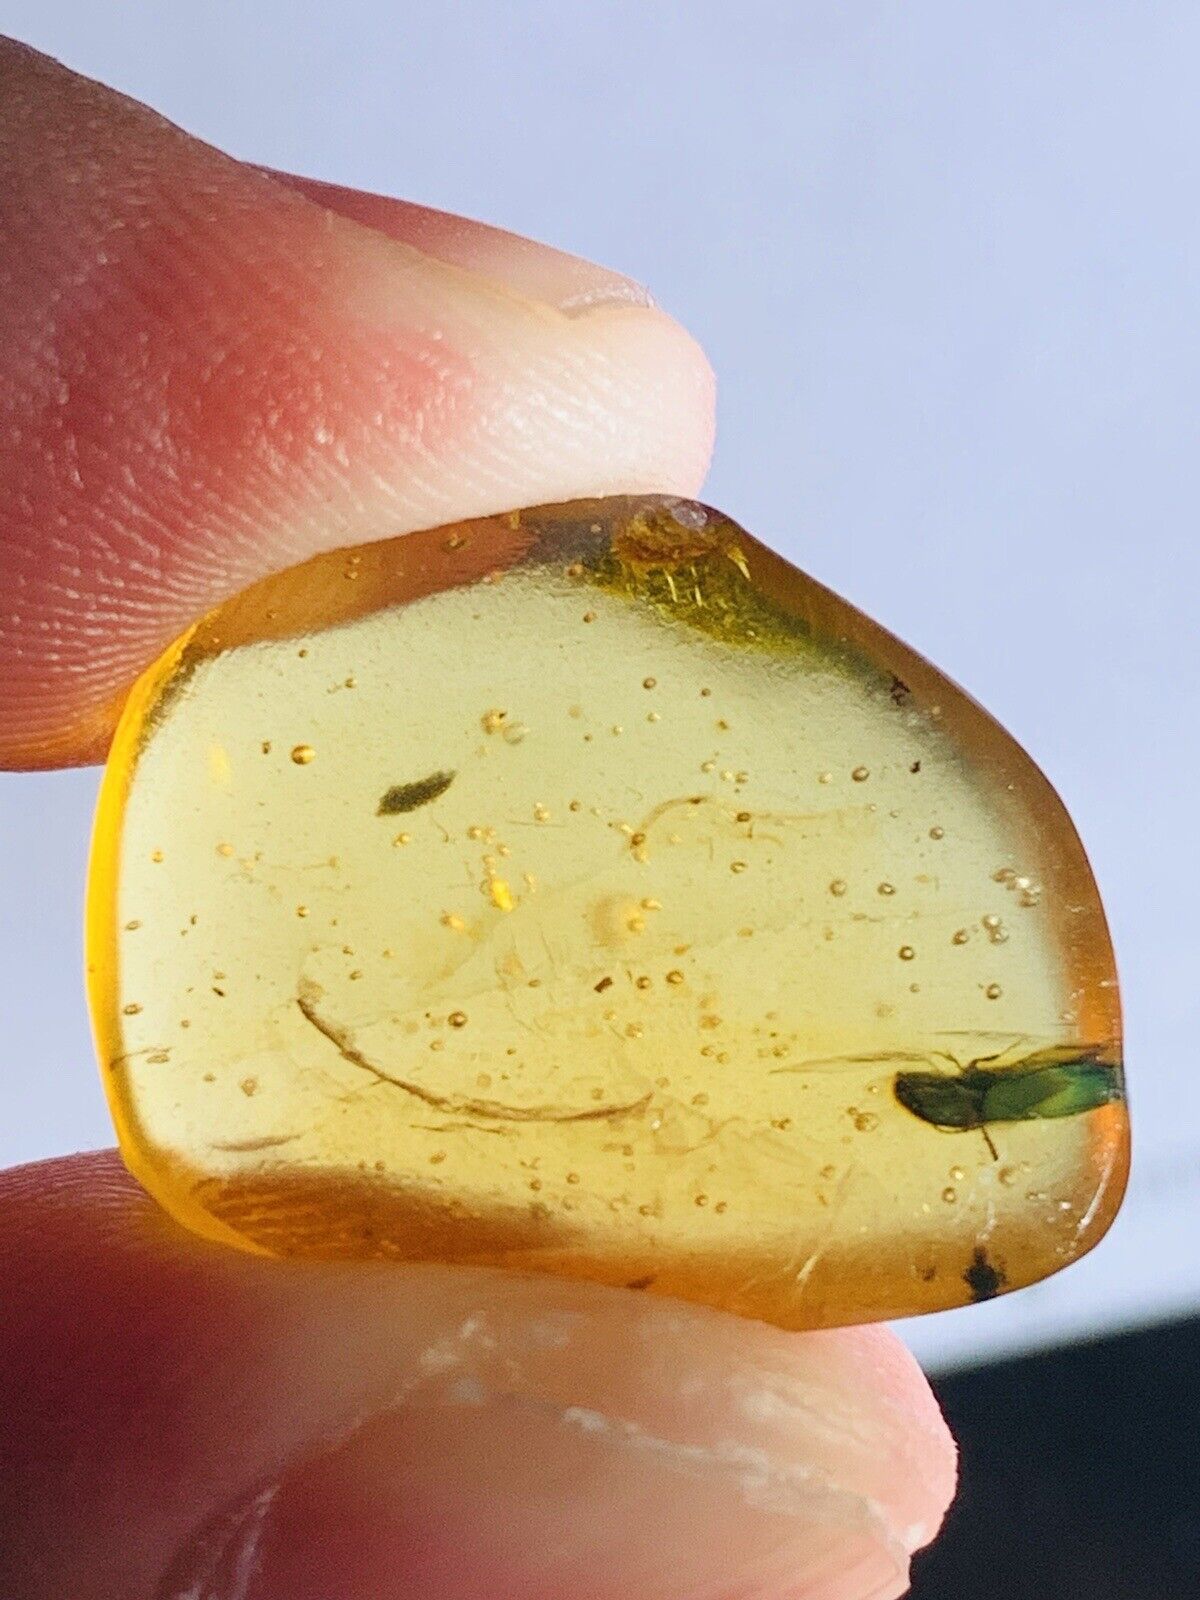 Unique Coleoptera beetle Burmite Myanmar Burma Amber insect fossil dinosaur age